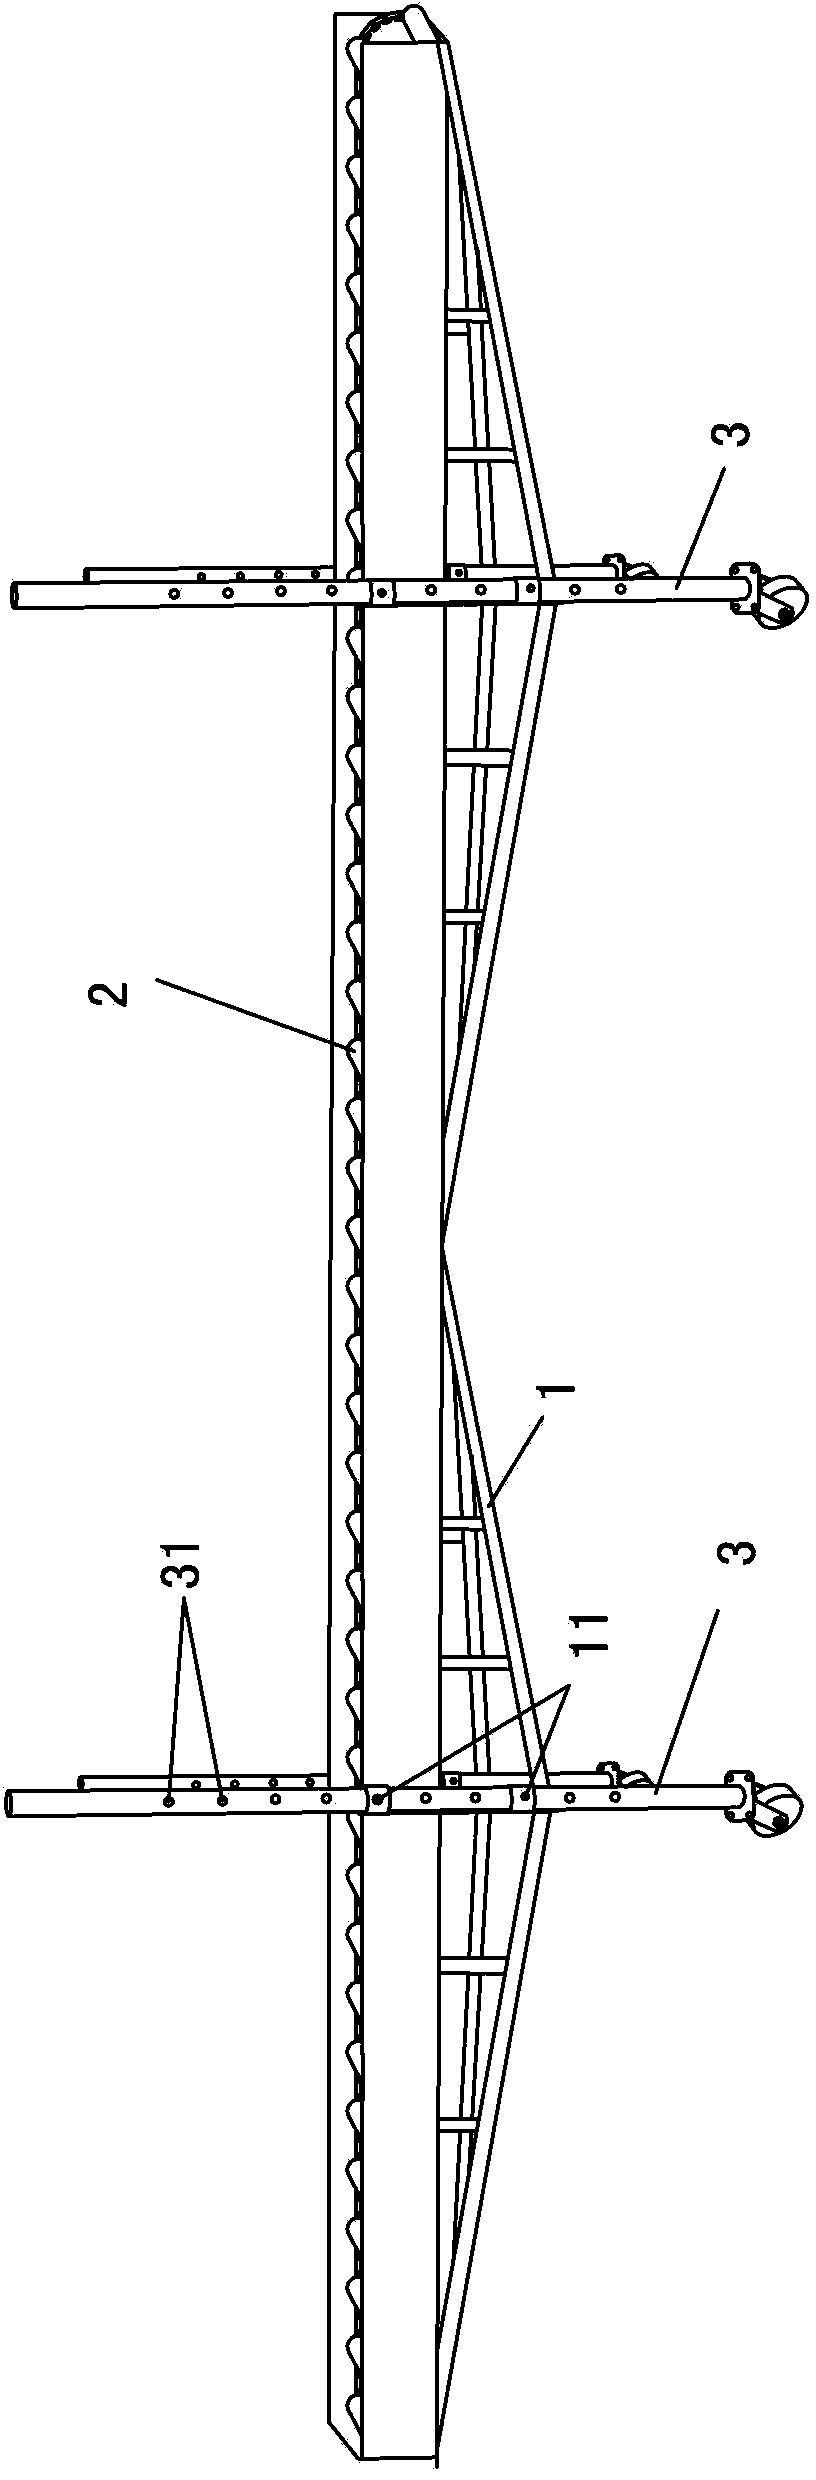 Dual-segment lifting type conveying mechanism